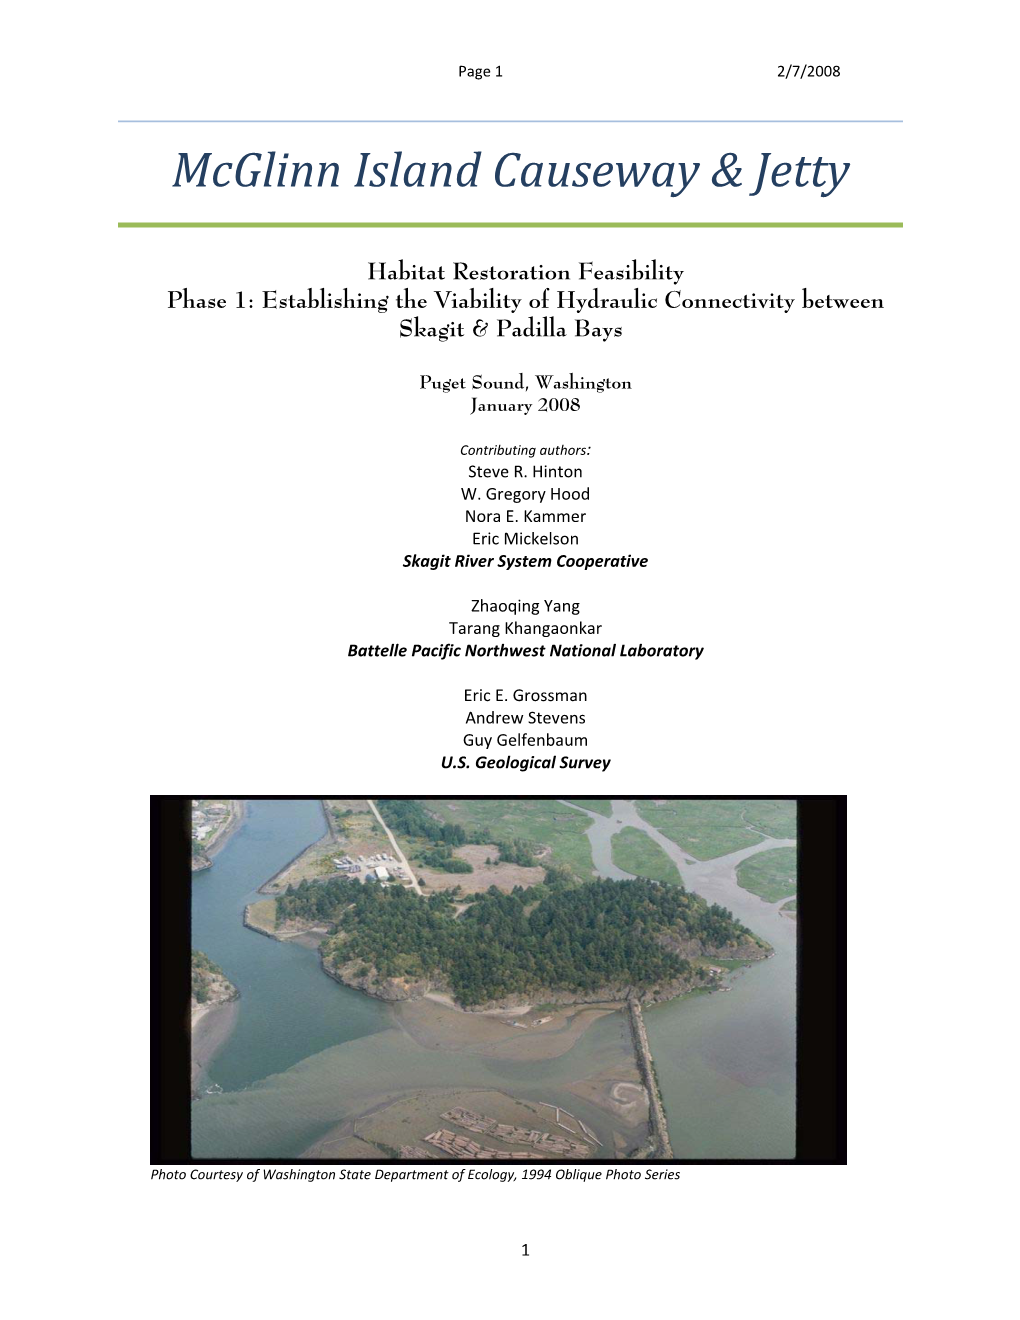 Mcglinn Island Causeway Feasibility Study” by Tarang Khangaonkar and Zhaoqing Yang